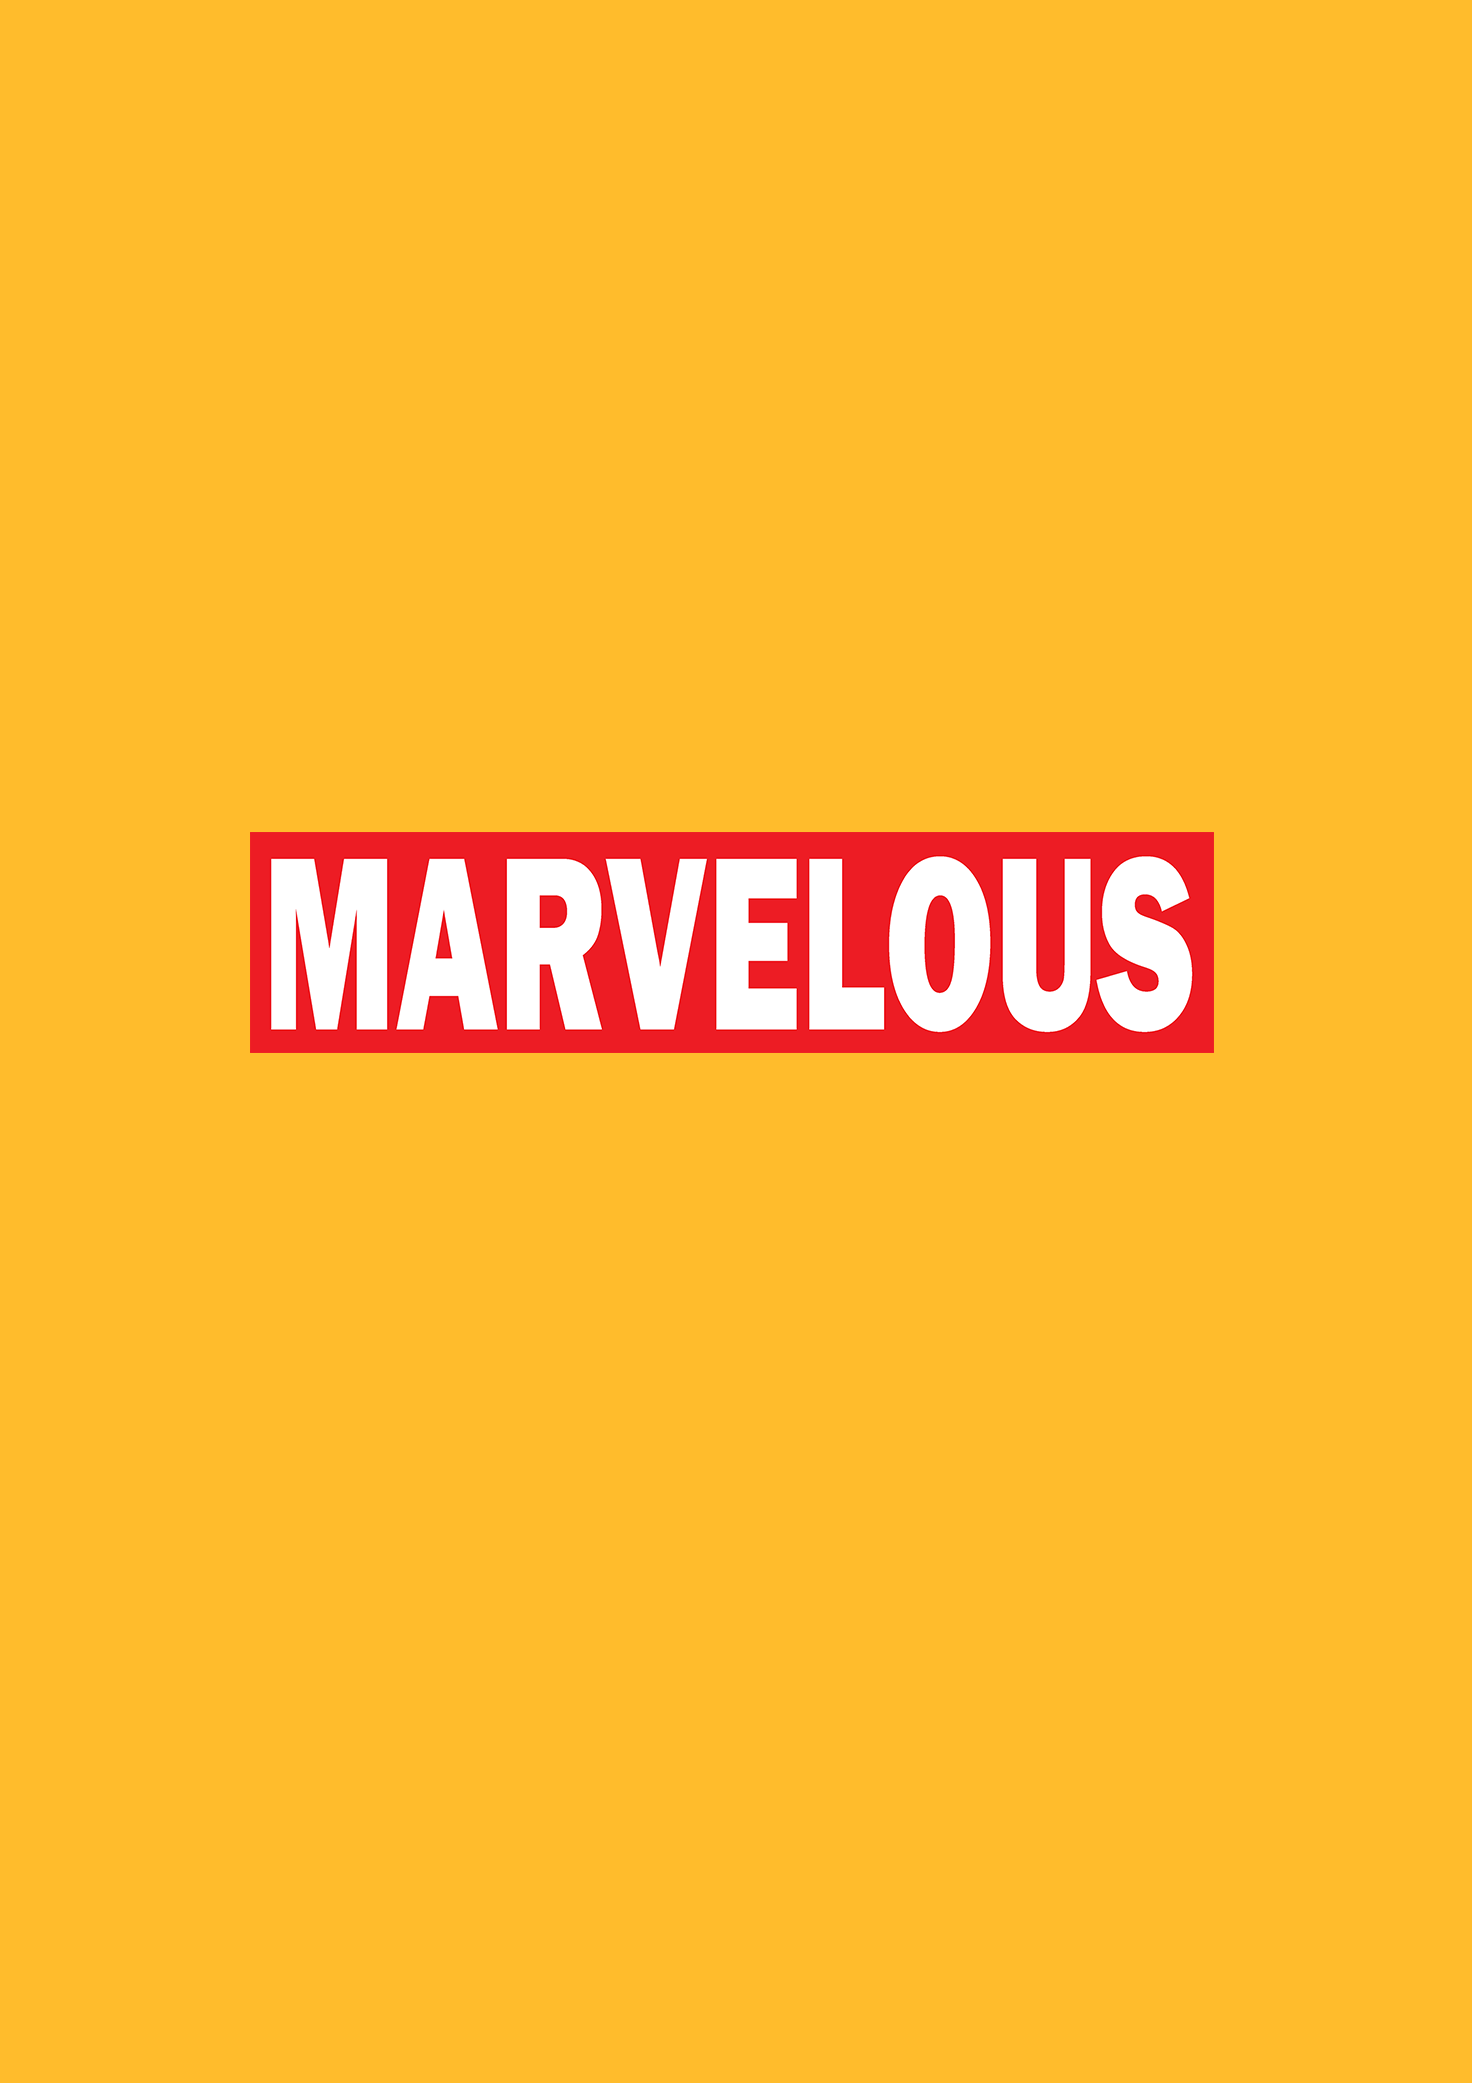 "MARVELOUS" HALF-SLEEVE T-SHIRT